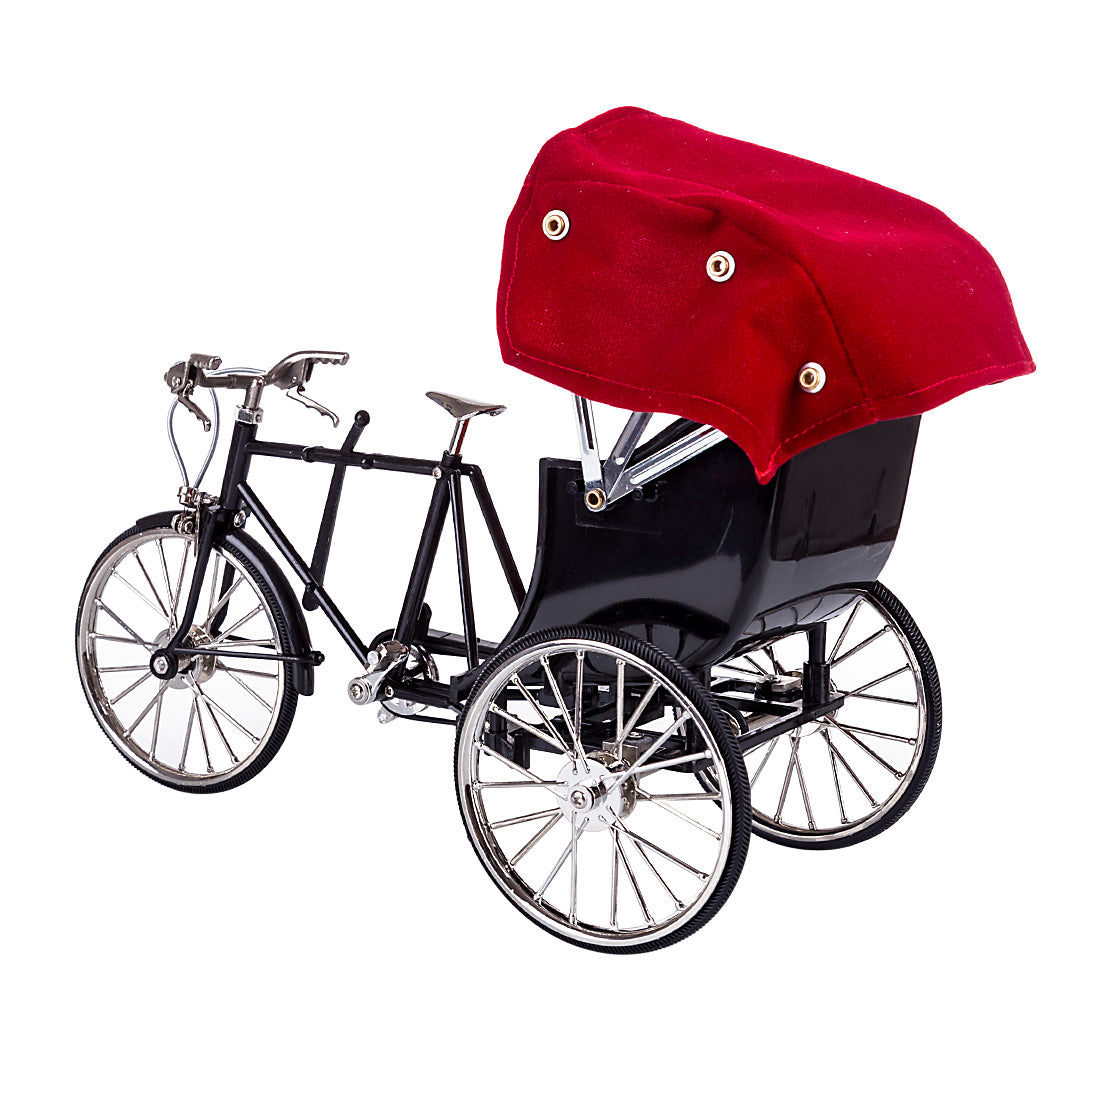 metal-diy-bicycle-simulated-retro-rickshaw-bike-model-fs-0060-black-red